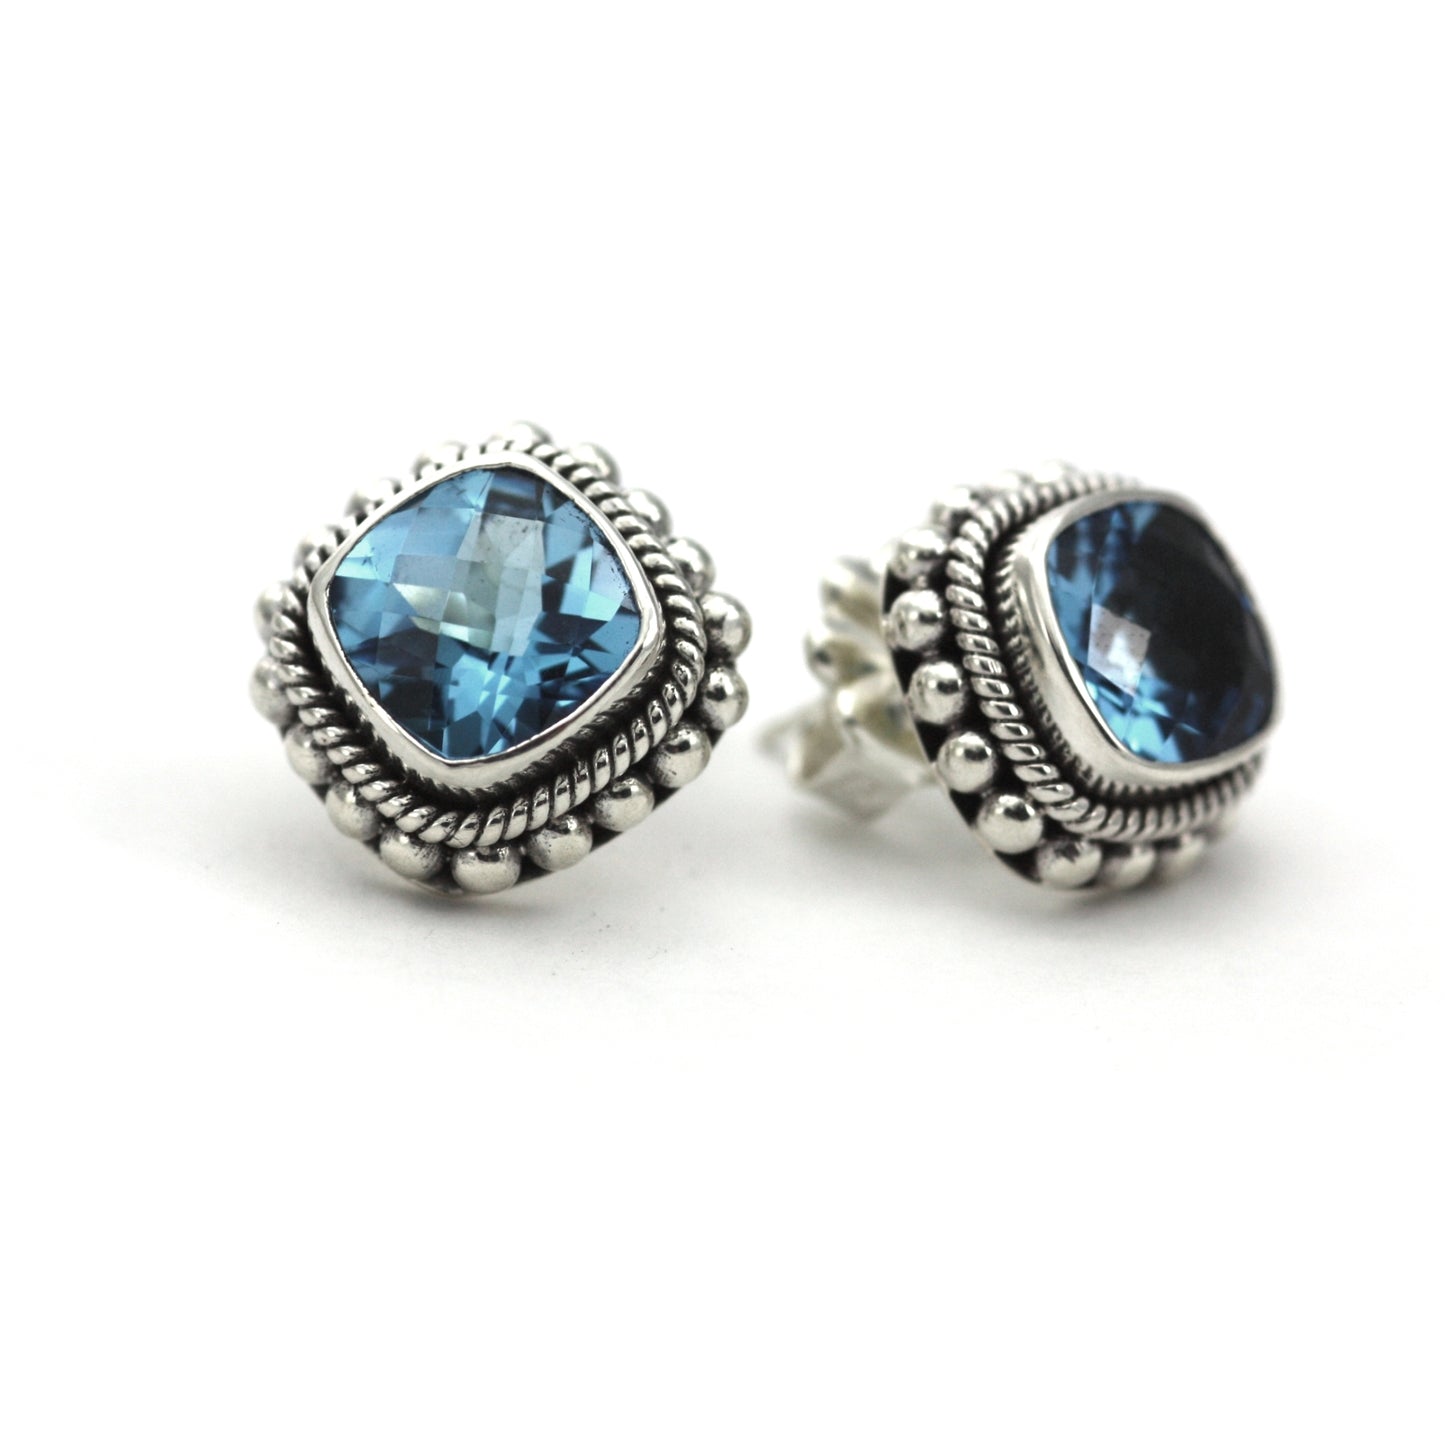 E200BT PADMA .925 Sterling Silver Post Bali Earrings with Genuine 8x8mm Swiss Blue Topaz Gemstones